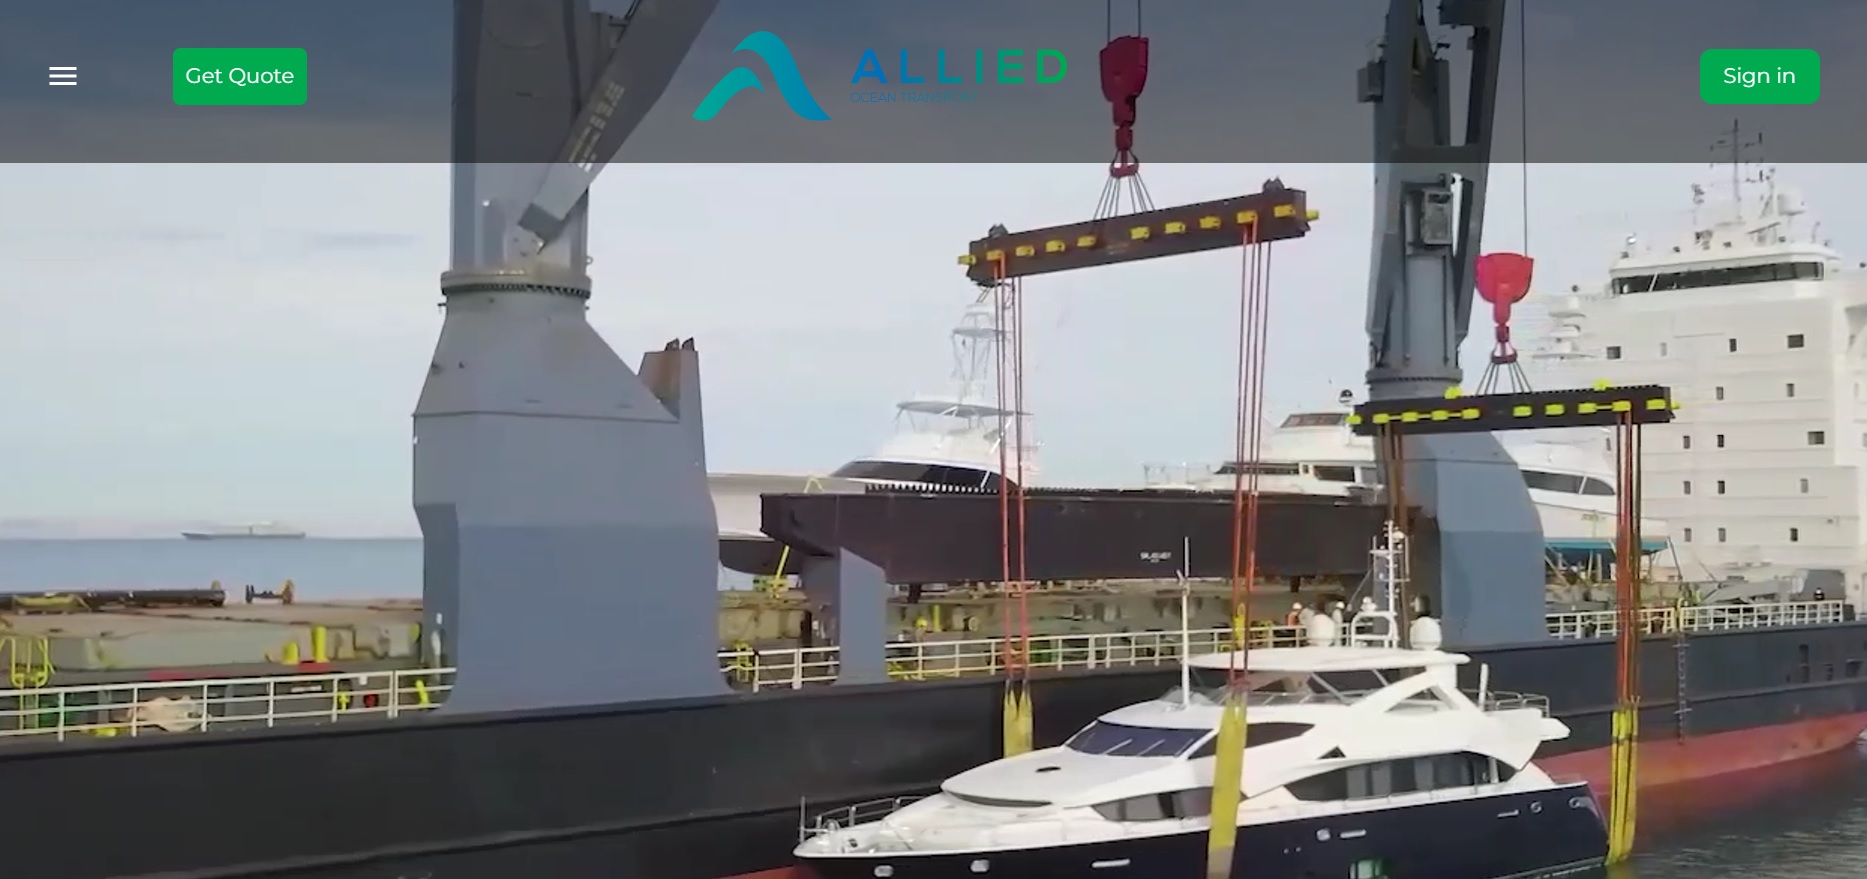 Allied yachts - yacht transportation